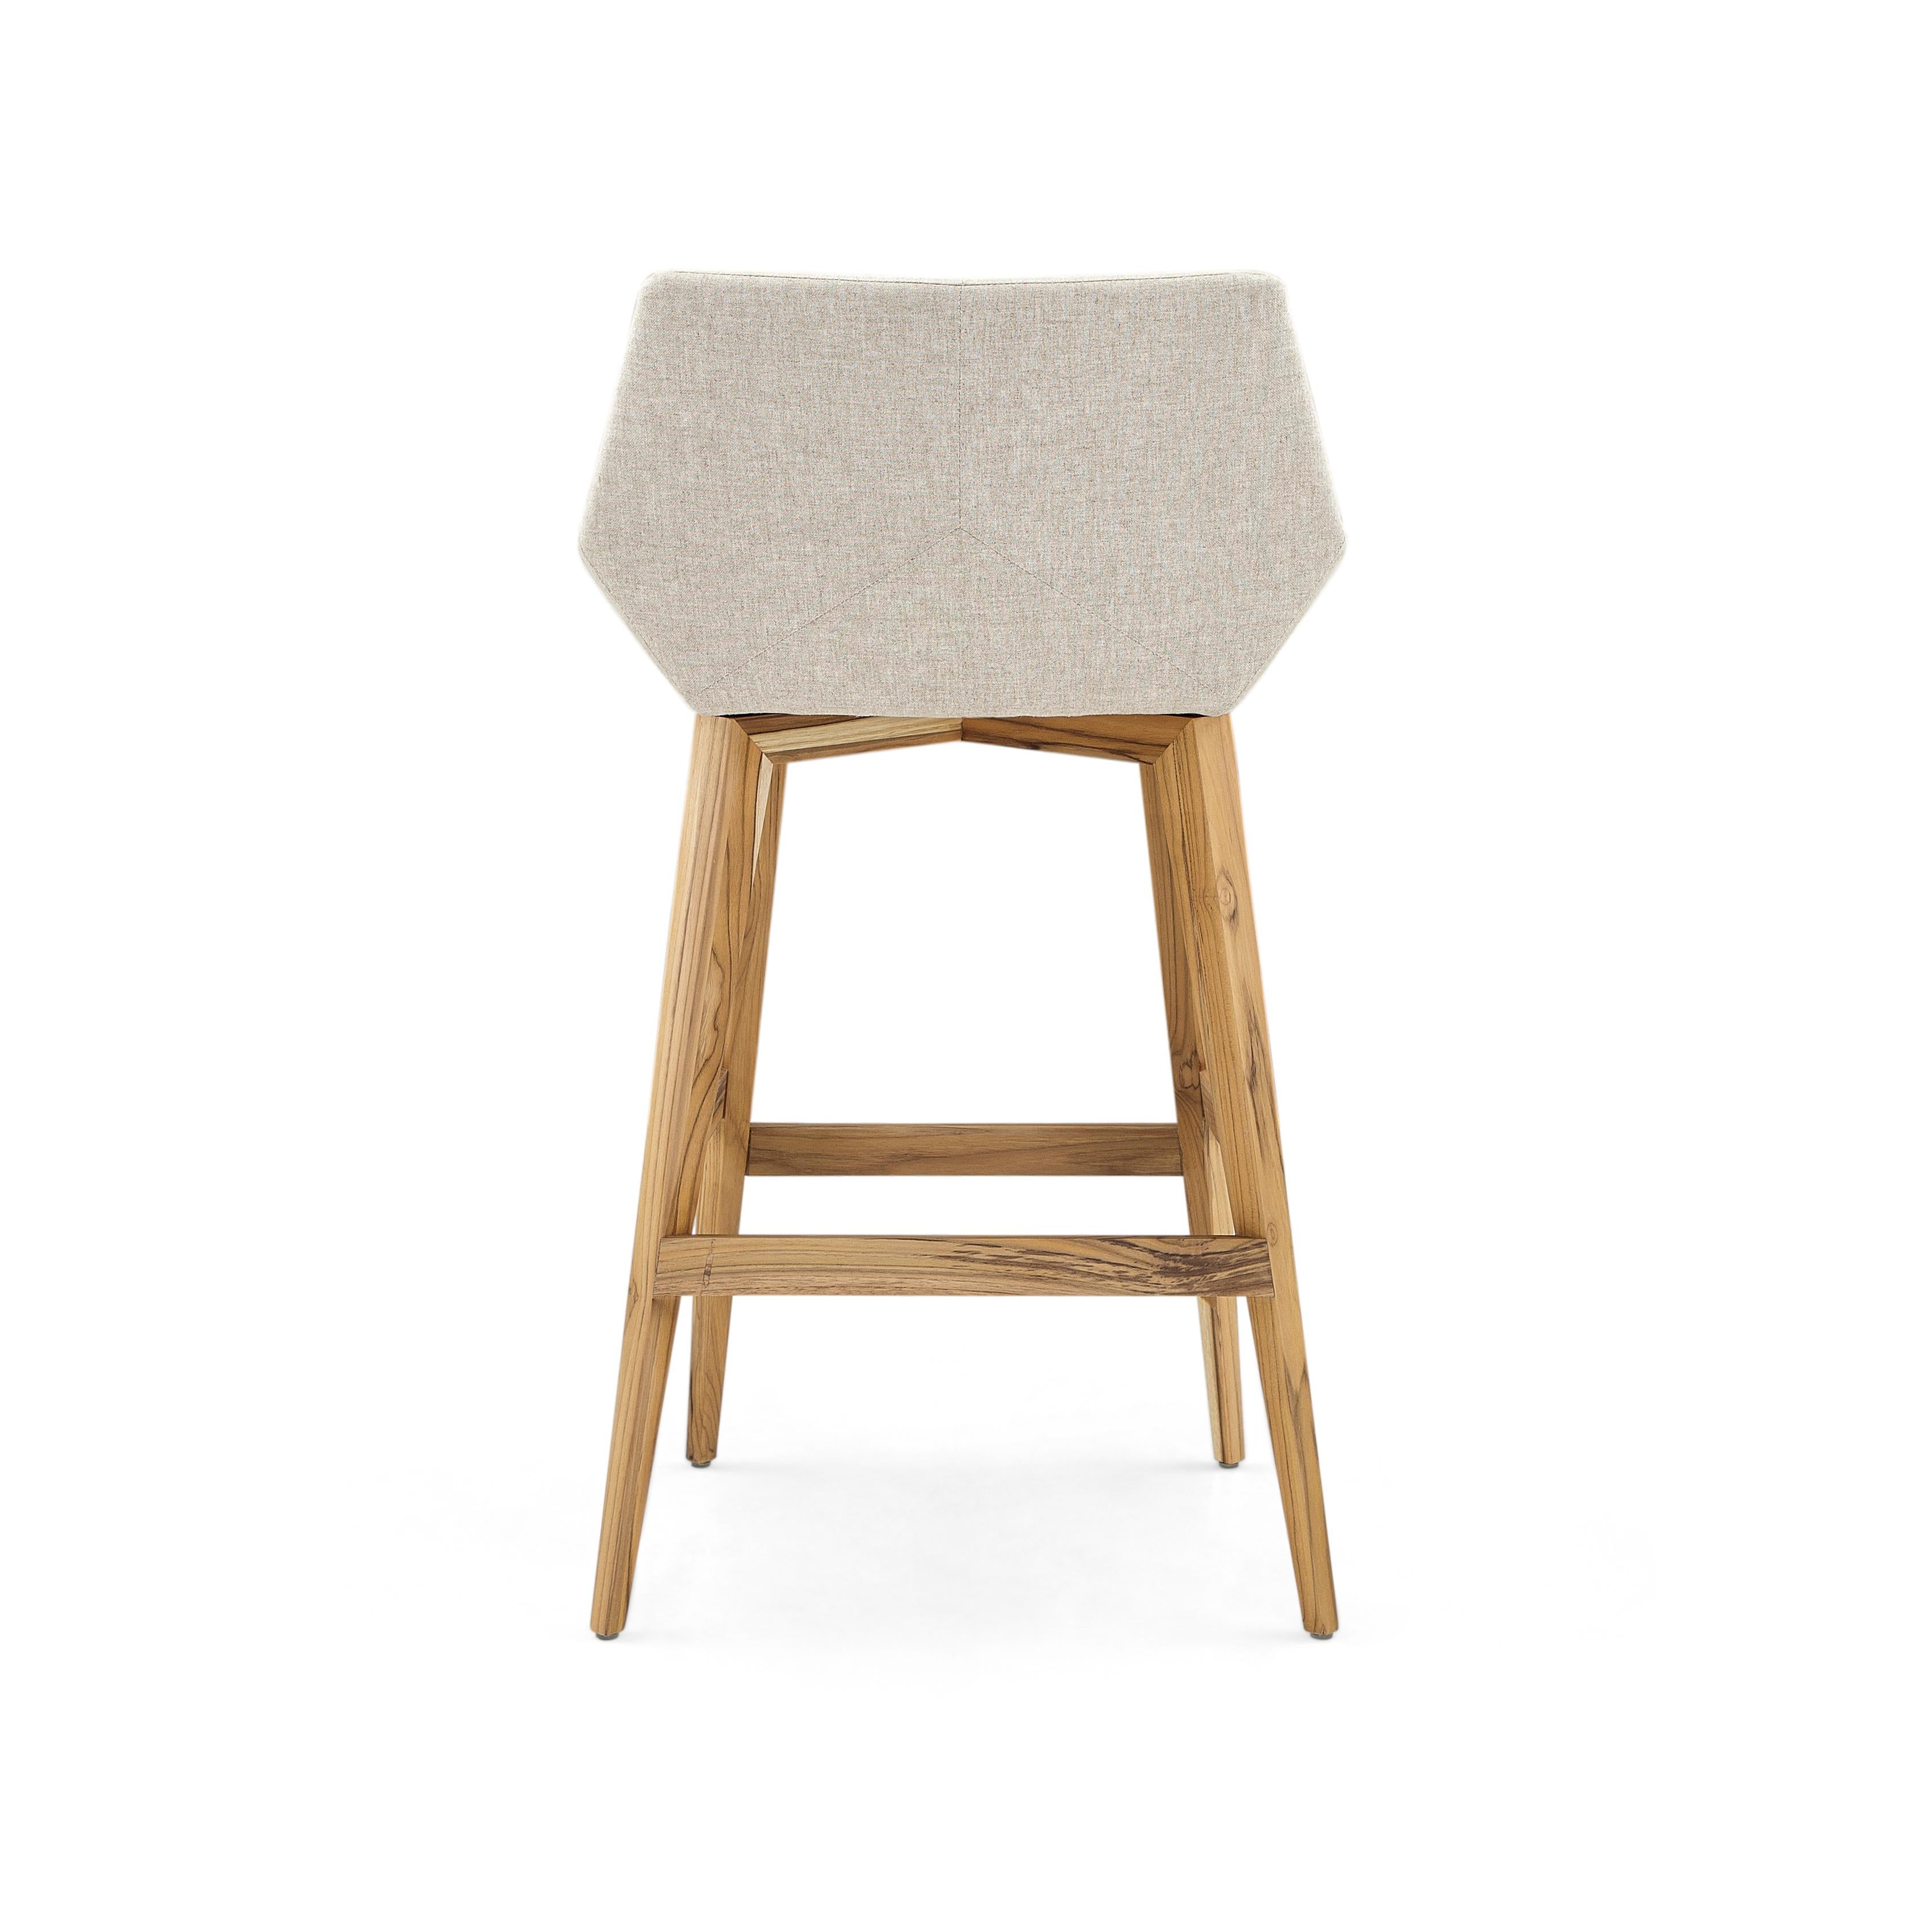 Brazilian Geometric Cubi Counter Stool Teak Wood Finish Base and Beige Fabric Seat For Sale